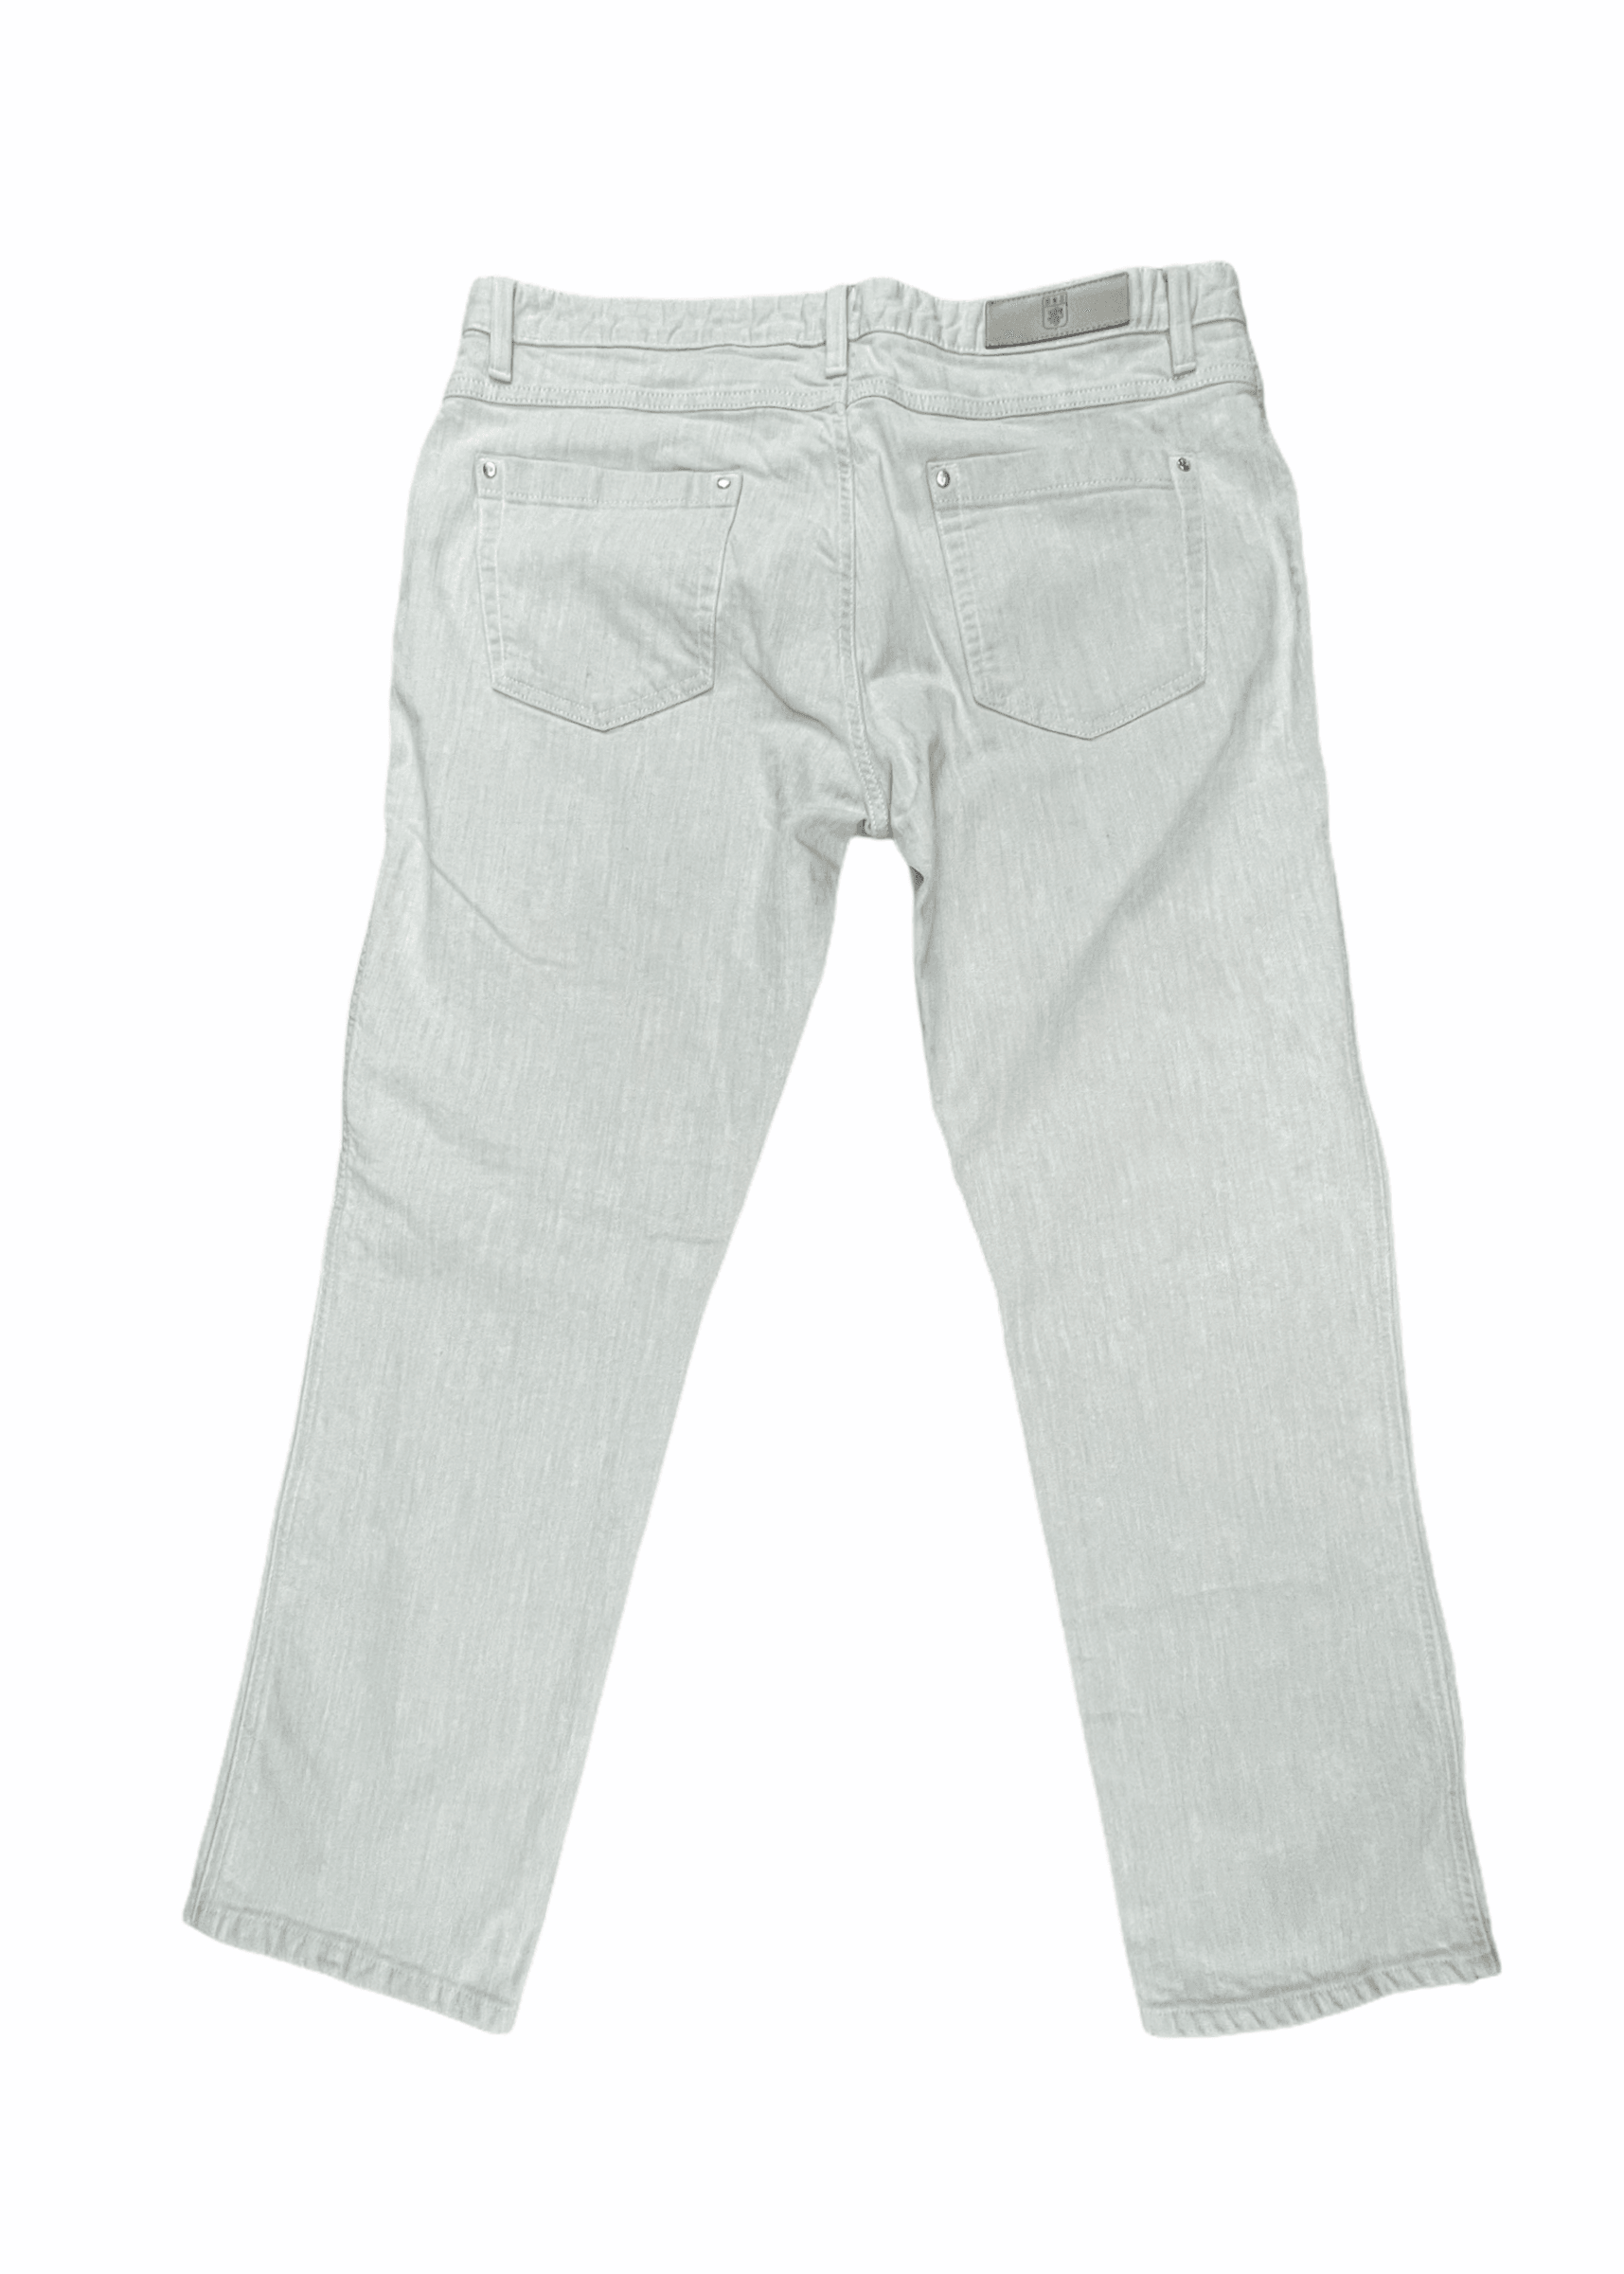 Ermenegildo Zegna Stone Grey Wash 5 Pocket Denim Jeans 36W 30L—Genuine Design luxury consignment 